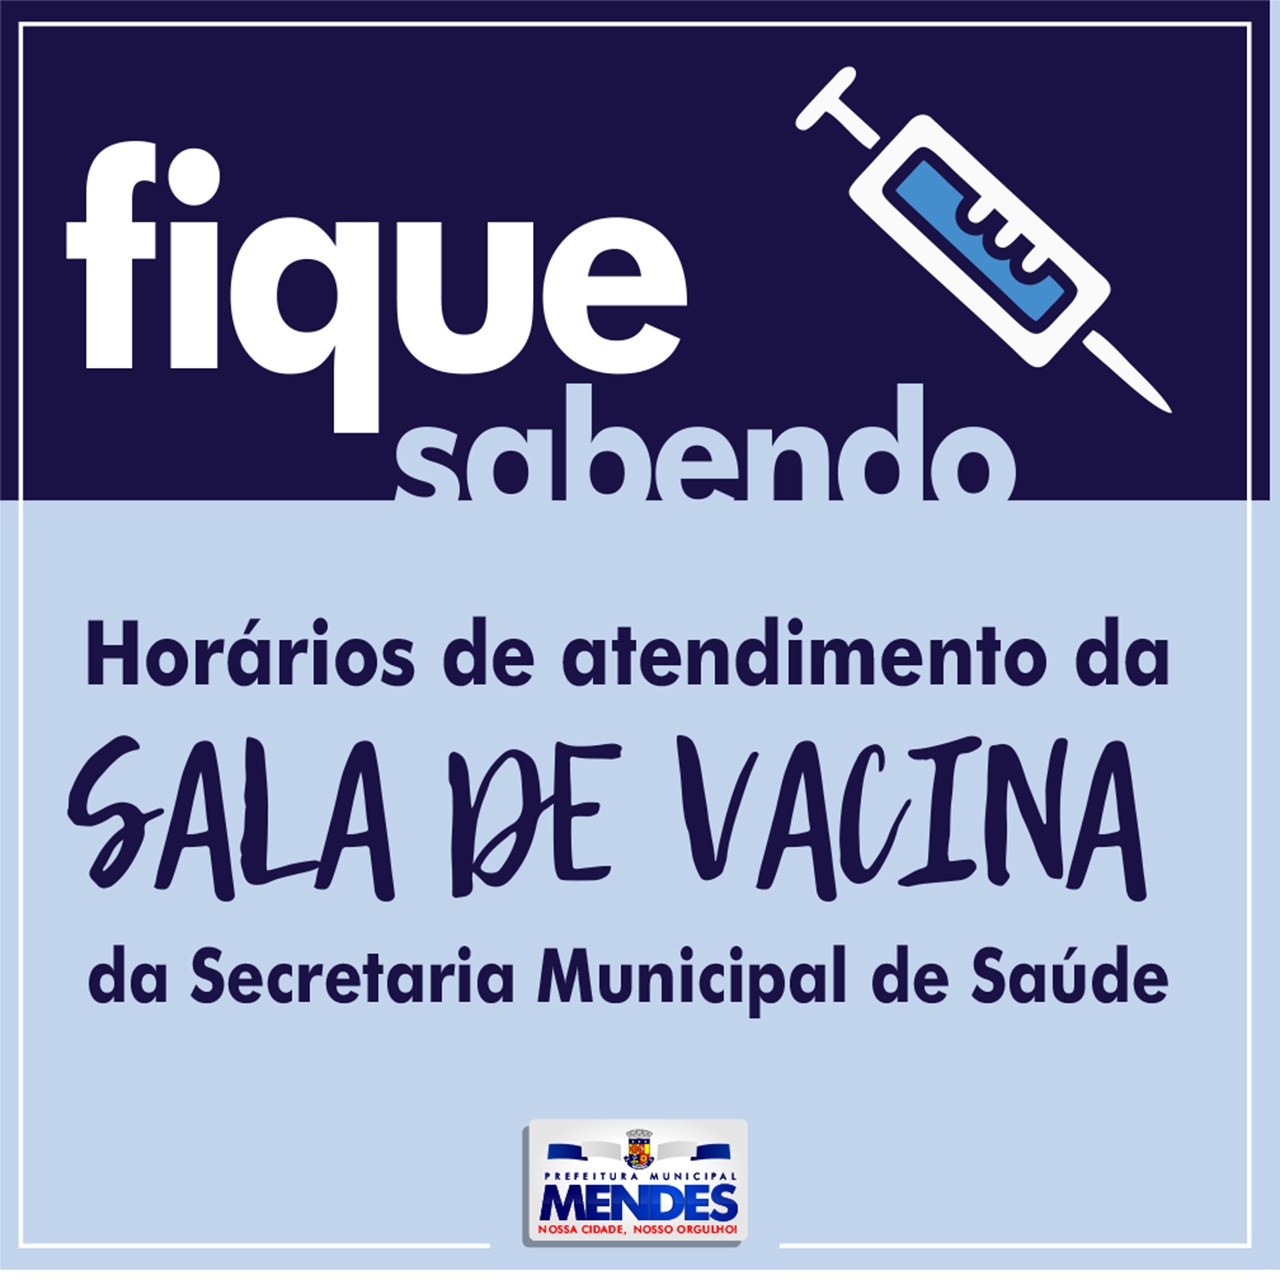 /Uploads/Images/sala_de_vacina_01.jpg